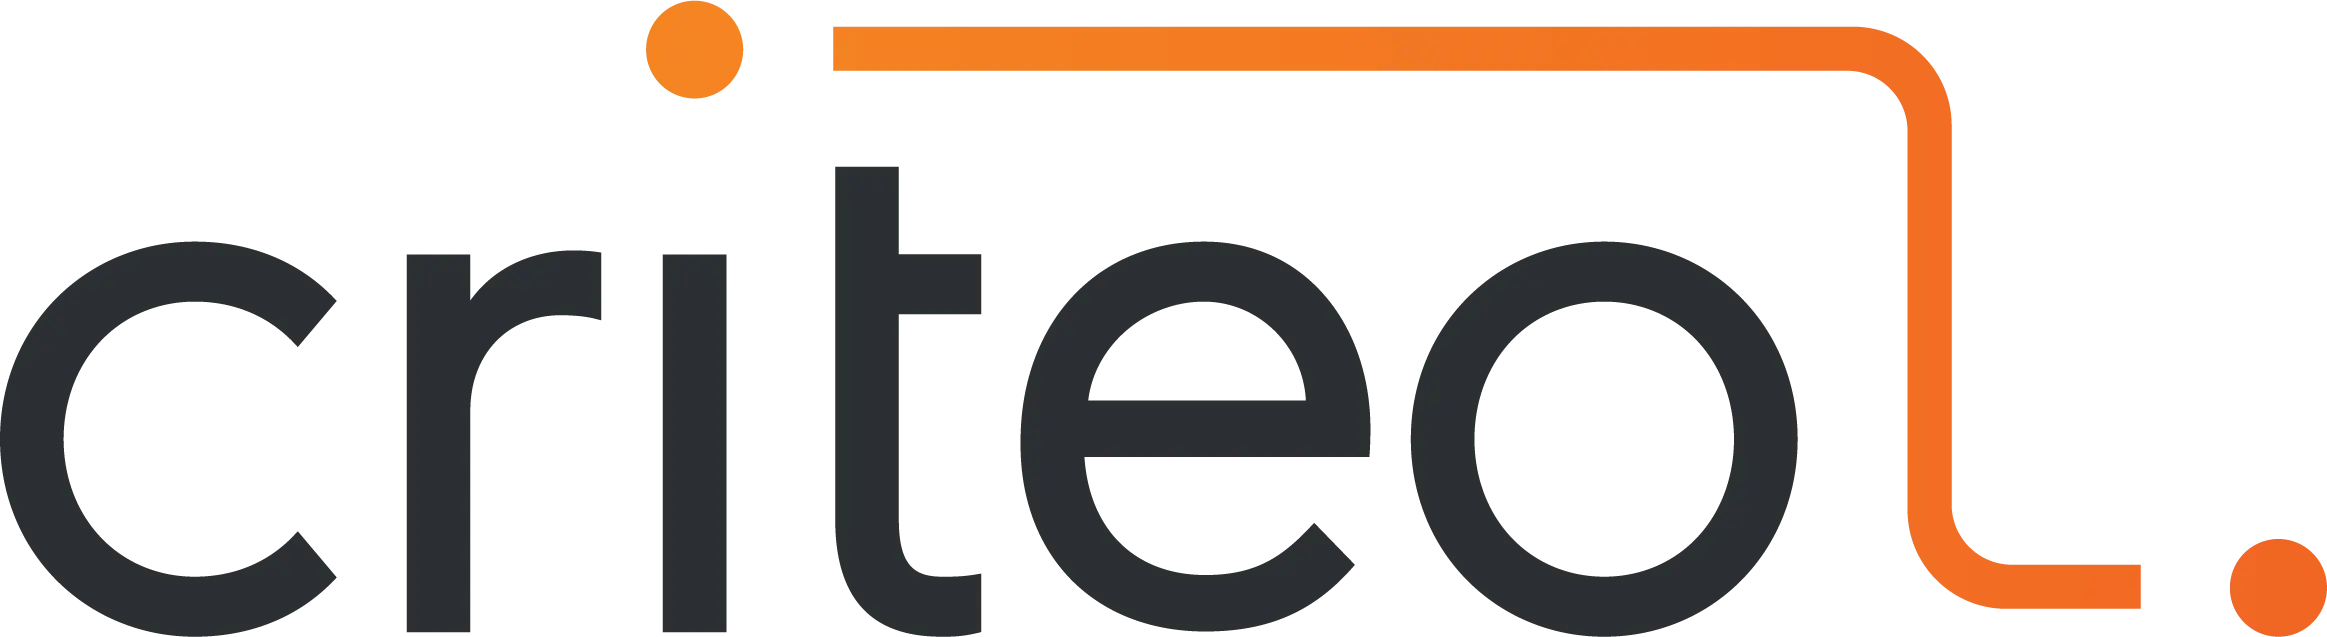 criteol-logo